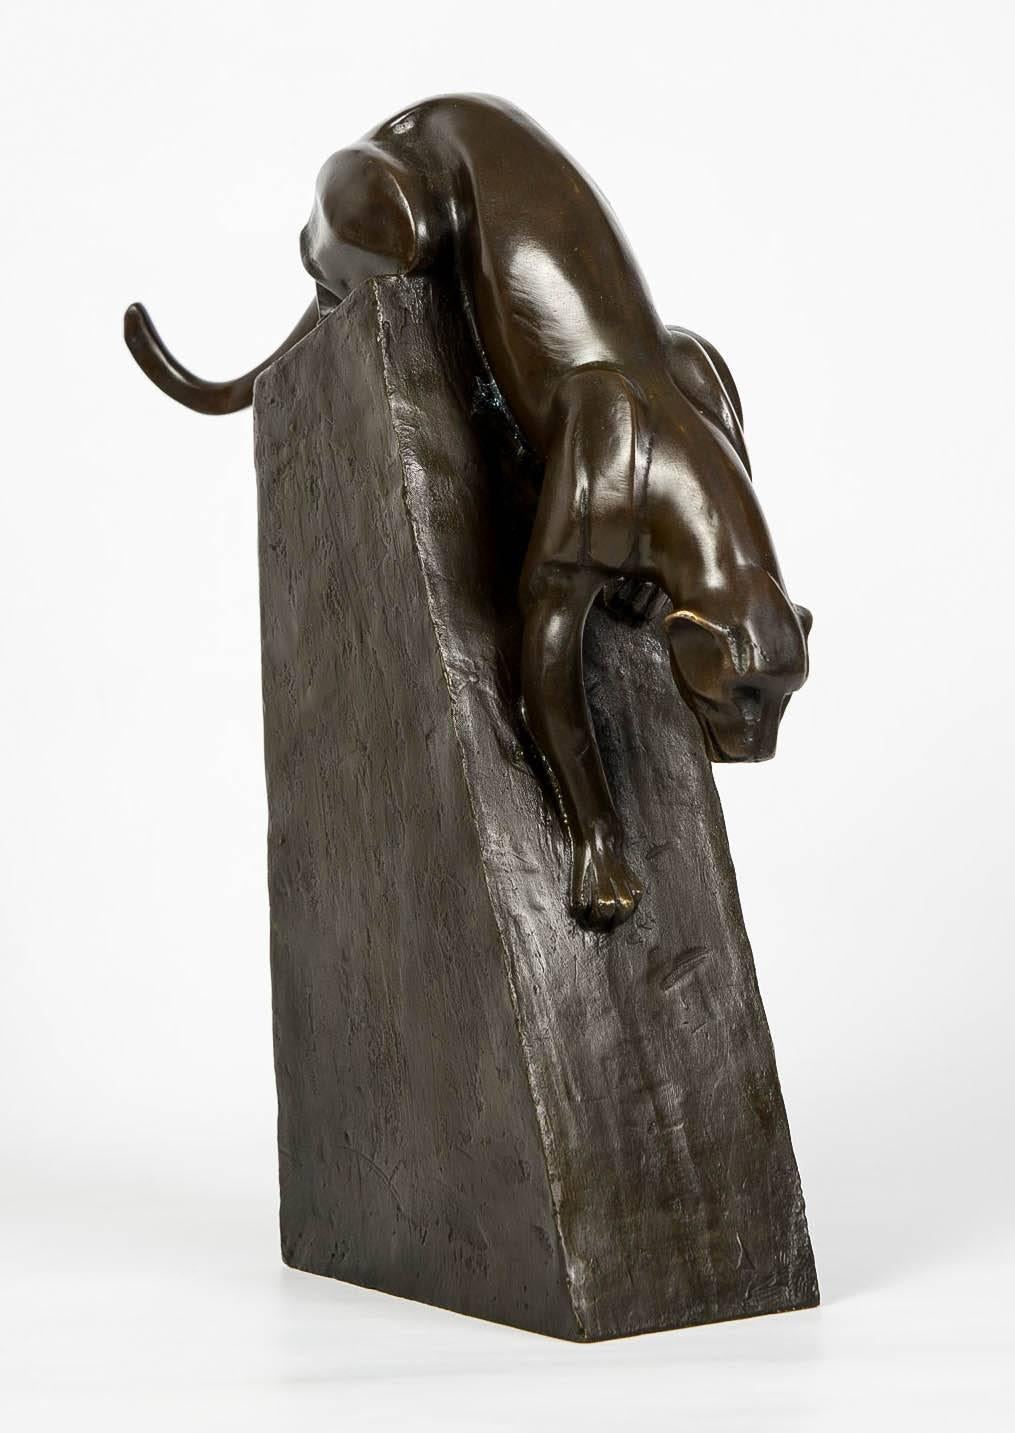 Beautiful sculpture in bronze by Milo.
